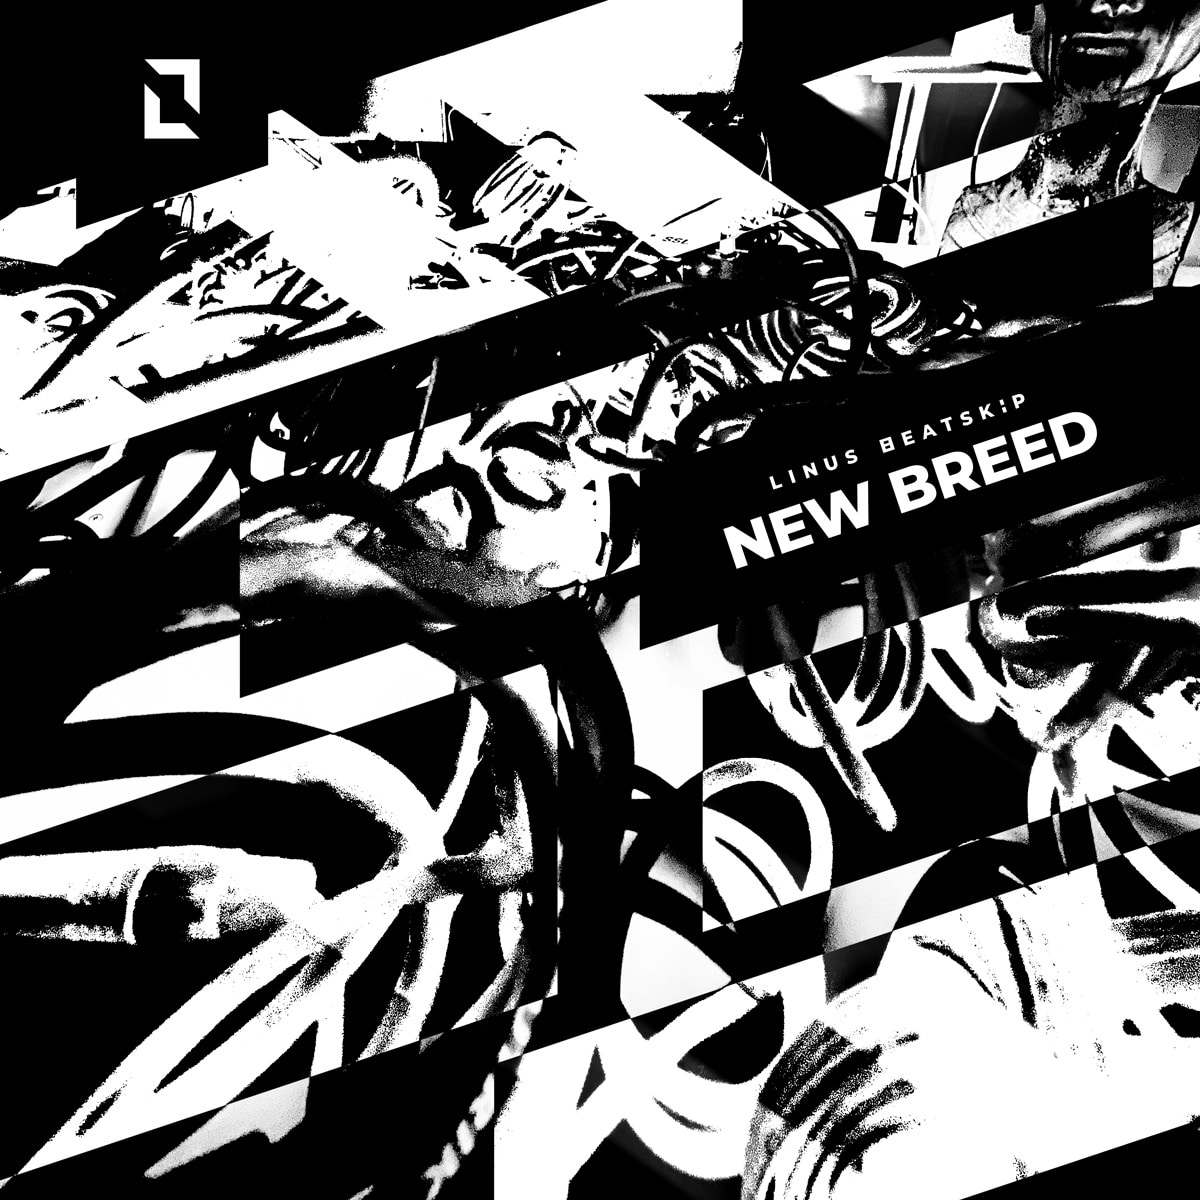 song: New Breed artist: LINUS BEATSKiP